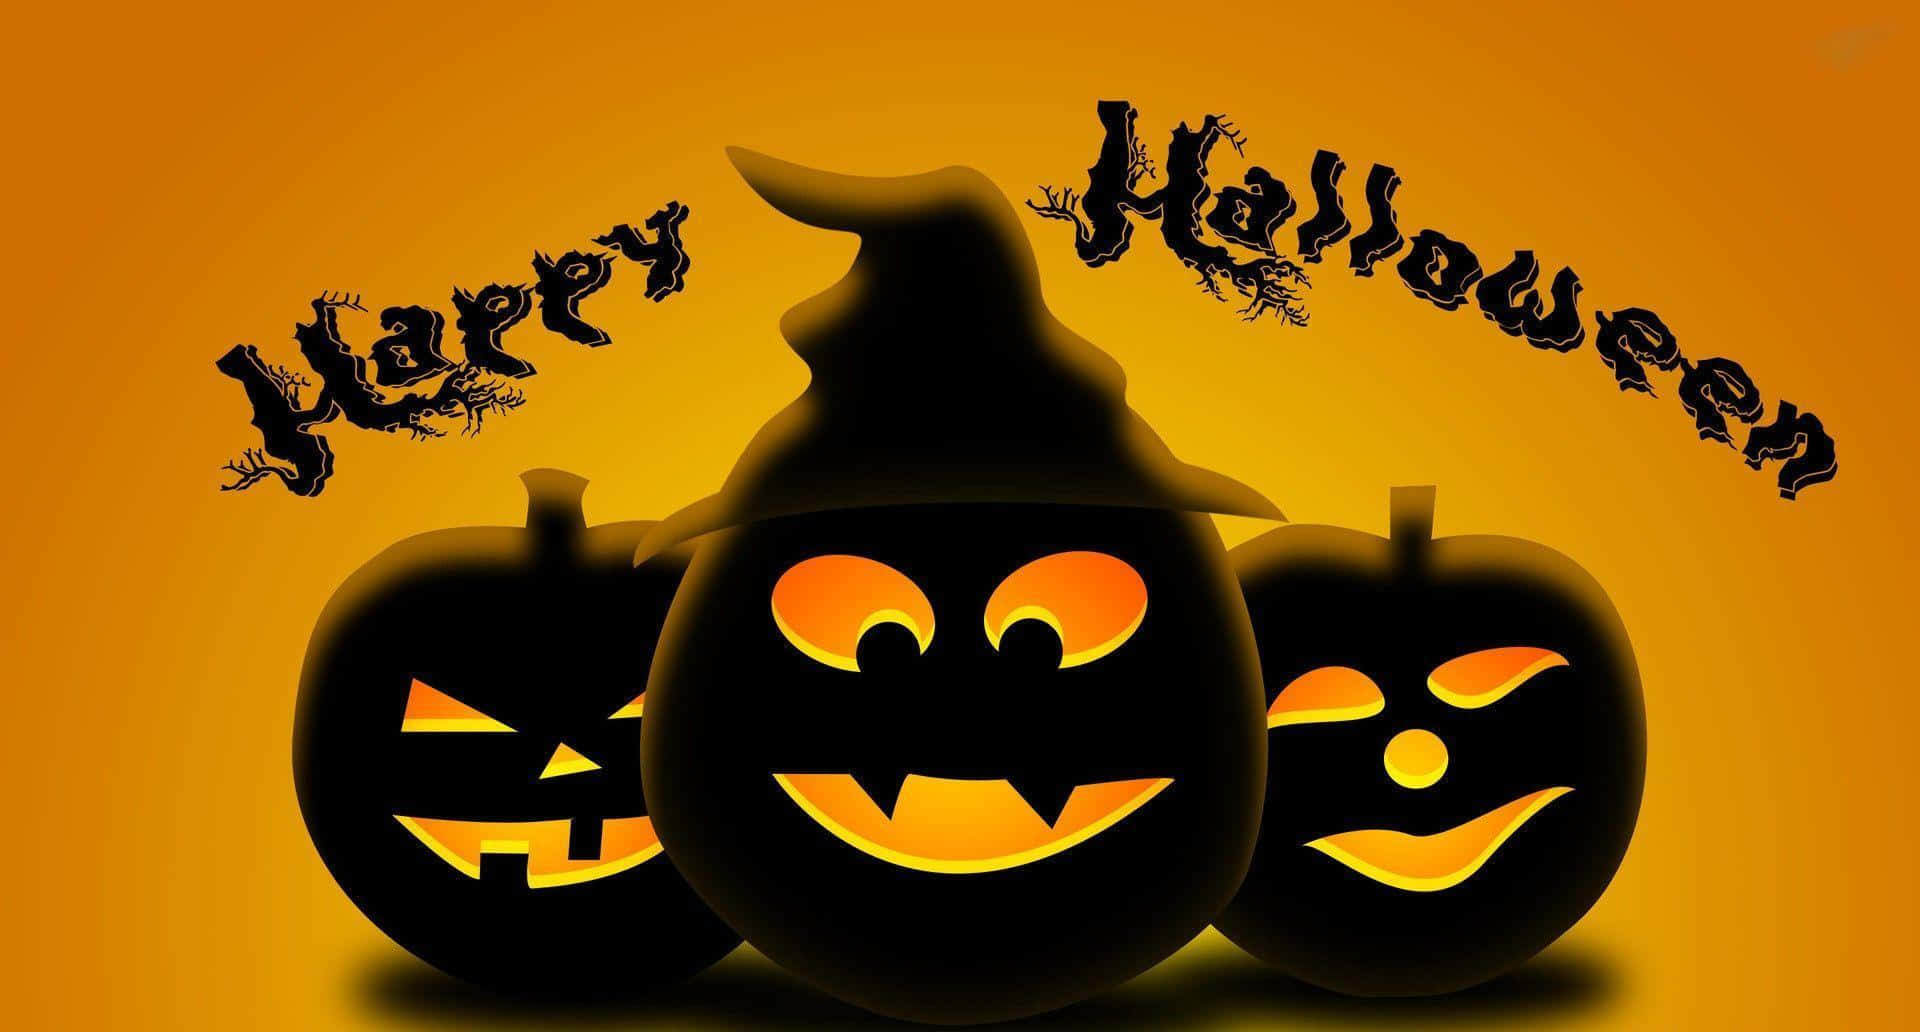 "Happy Halloween! Trick-or-treat and enjoy the spooky season."